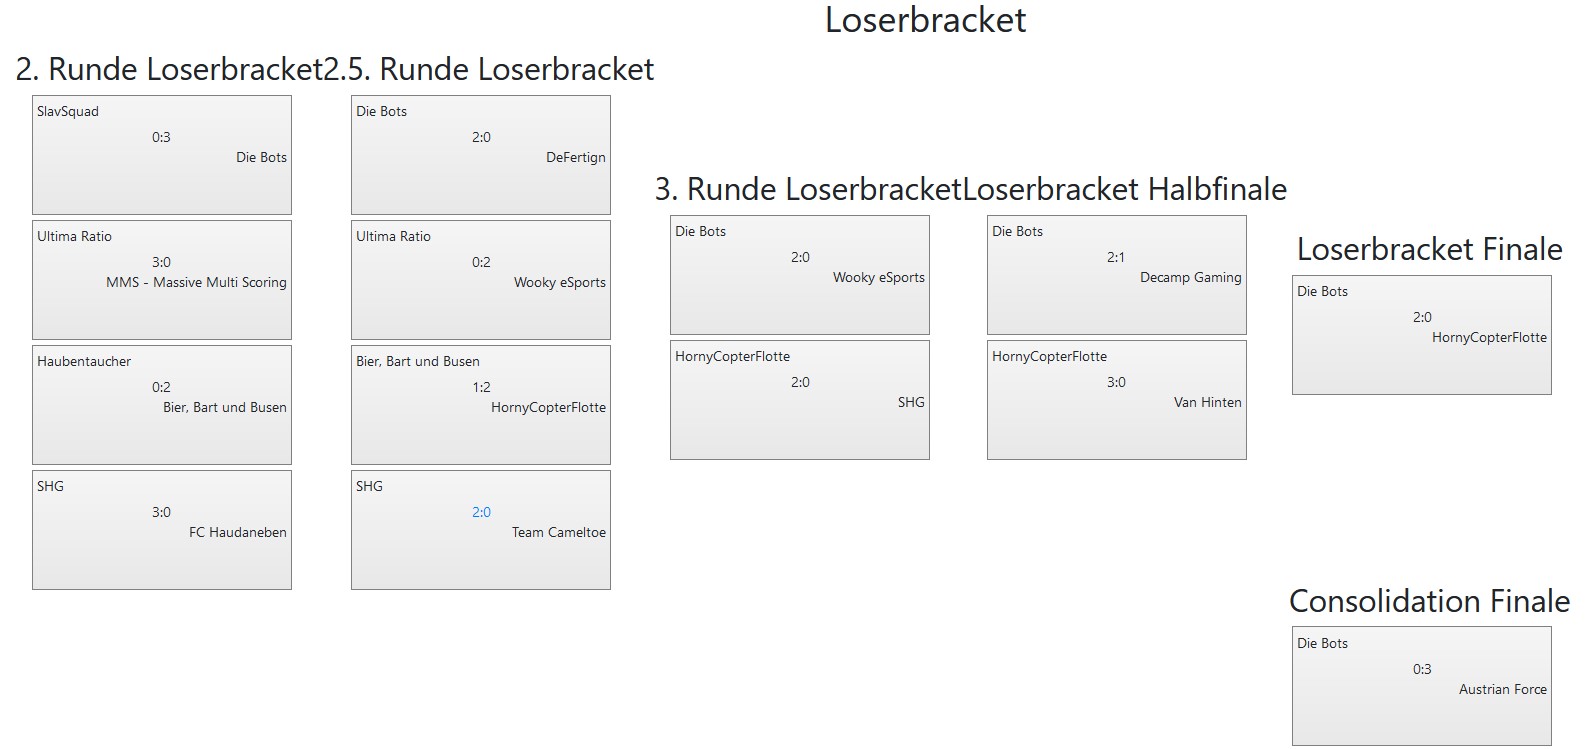 50.VulkanLAN Rocket League tournamenttree loserbracket